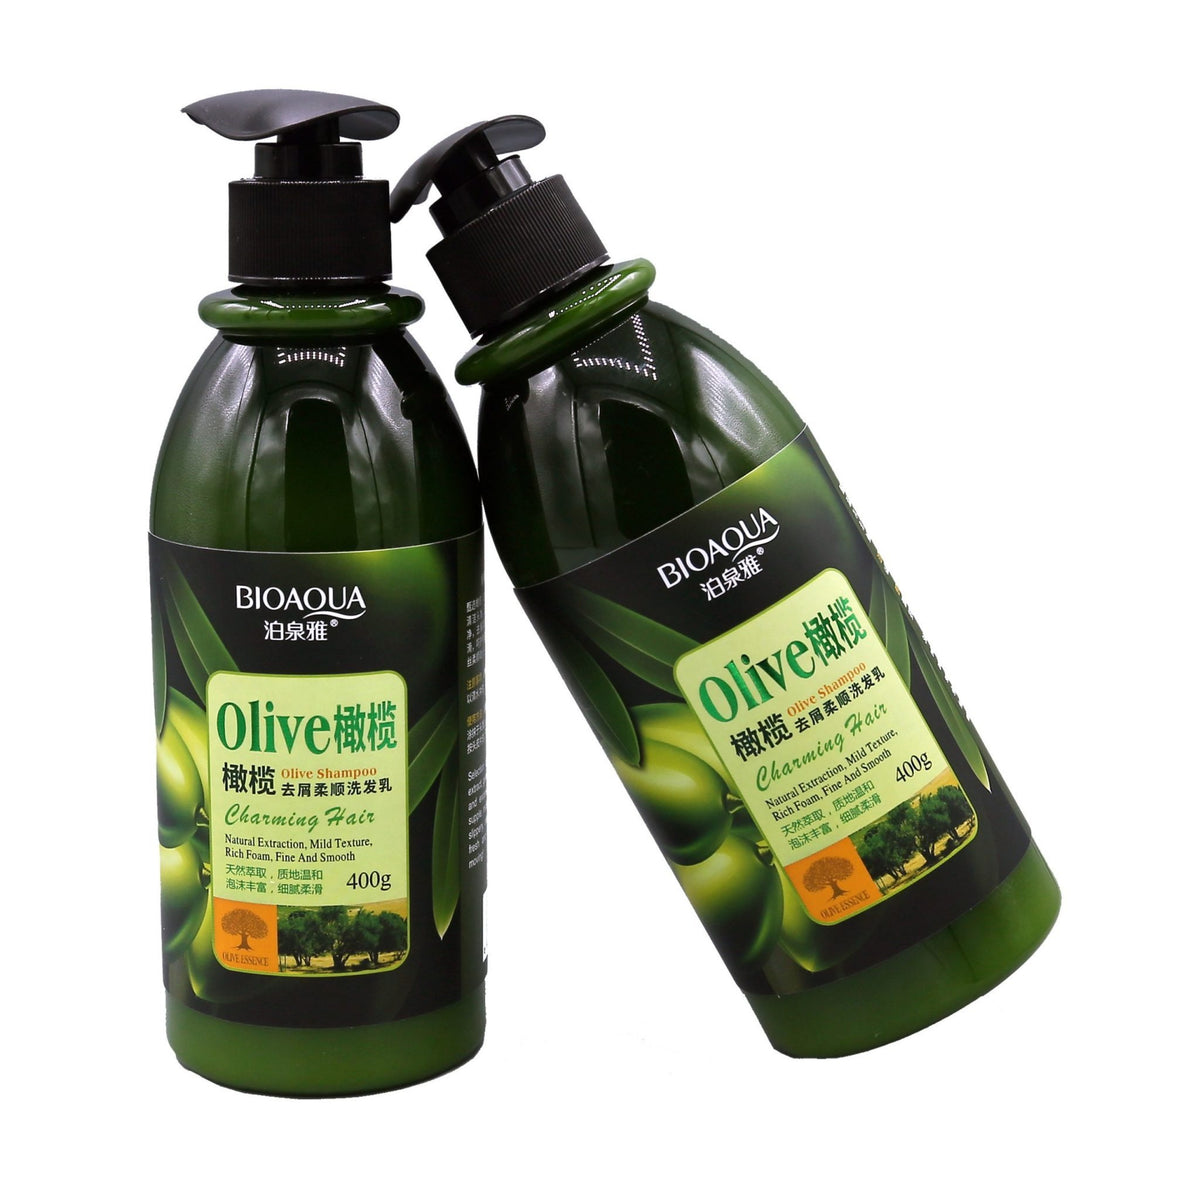 Bio Aqua Olive Shampoo Charming Hair 400g freeshipping - lasertag.pk